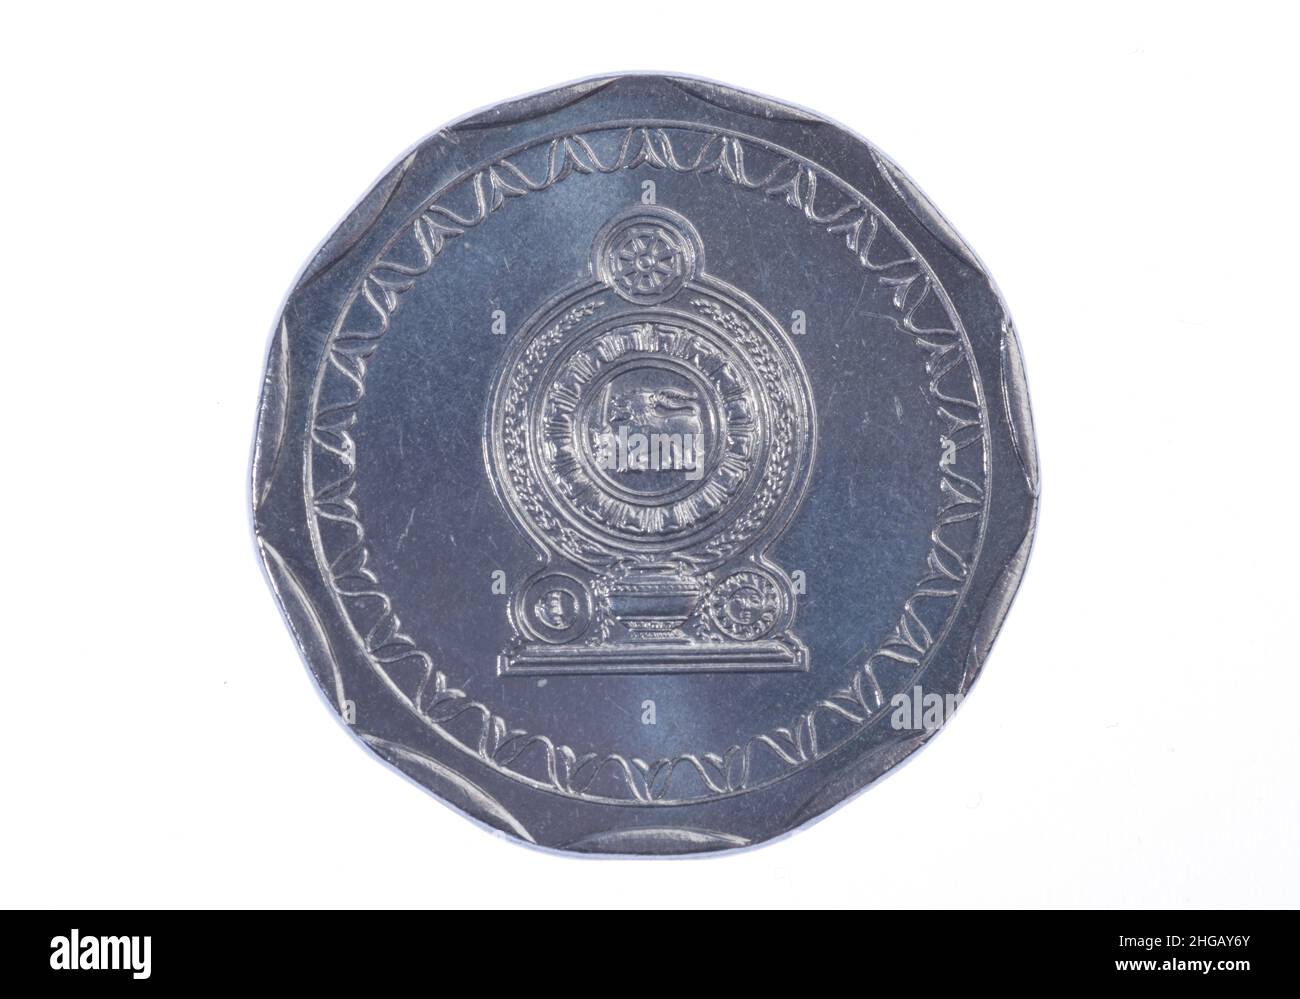 Money coin, 10 rupees, Sri Lanka Stock Photo